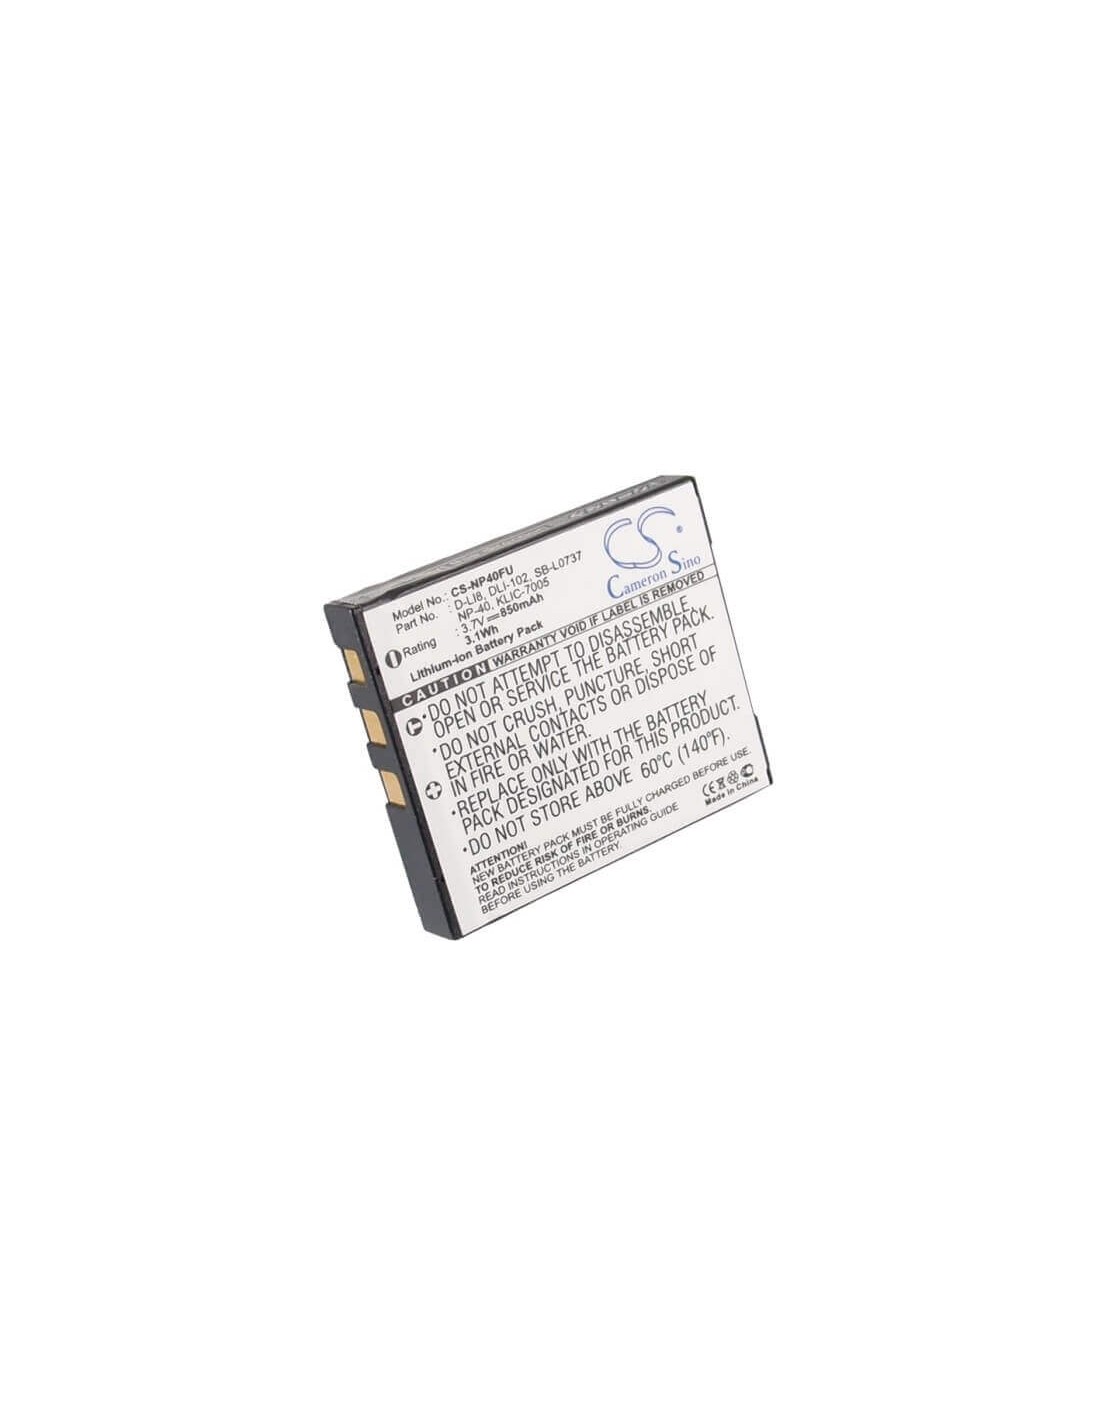 Battery for Samsung Digimax 1, Digimax I5, 3.7V, 850mAh - 3.15Wh